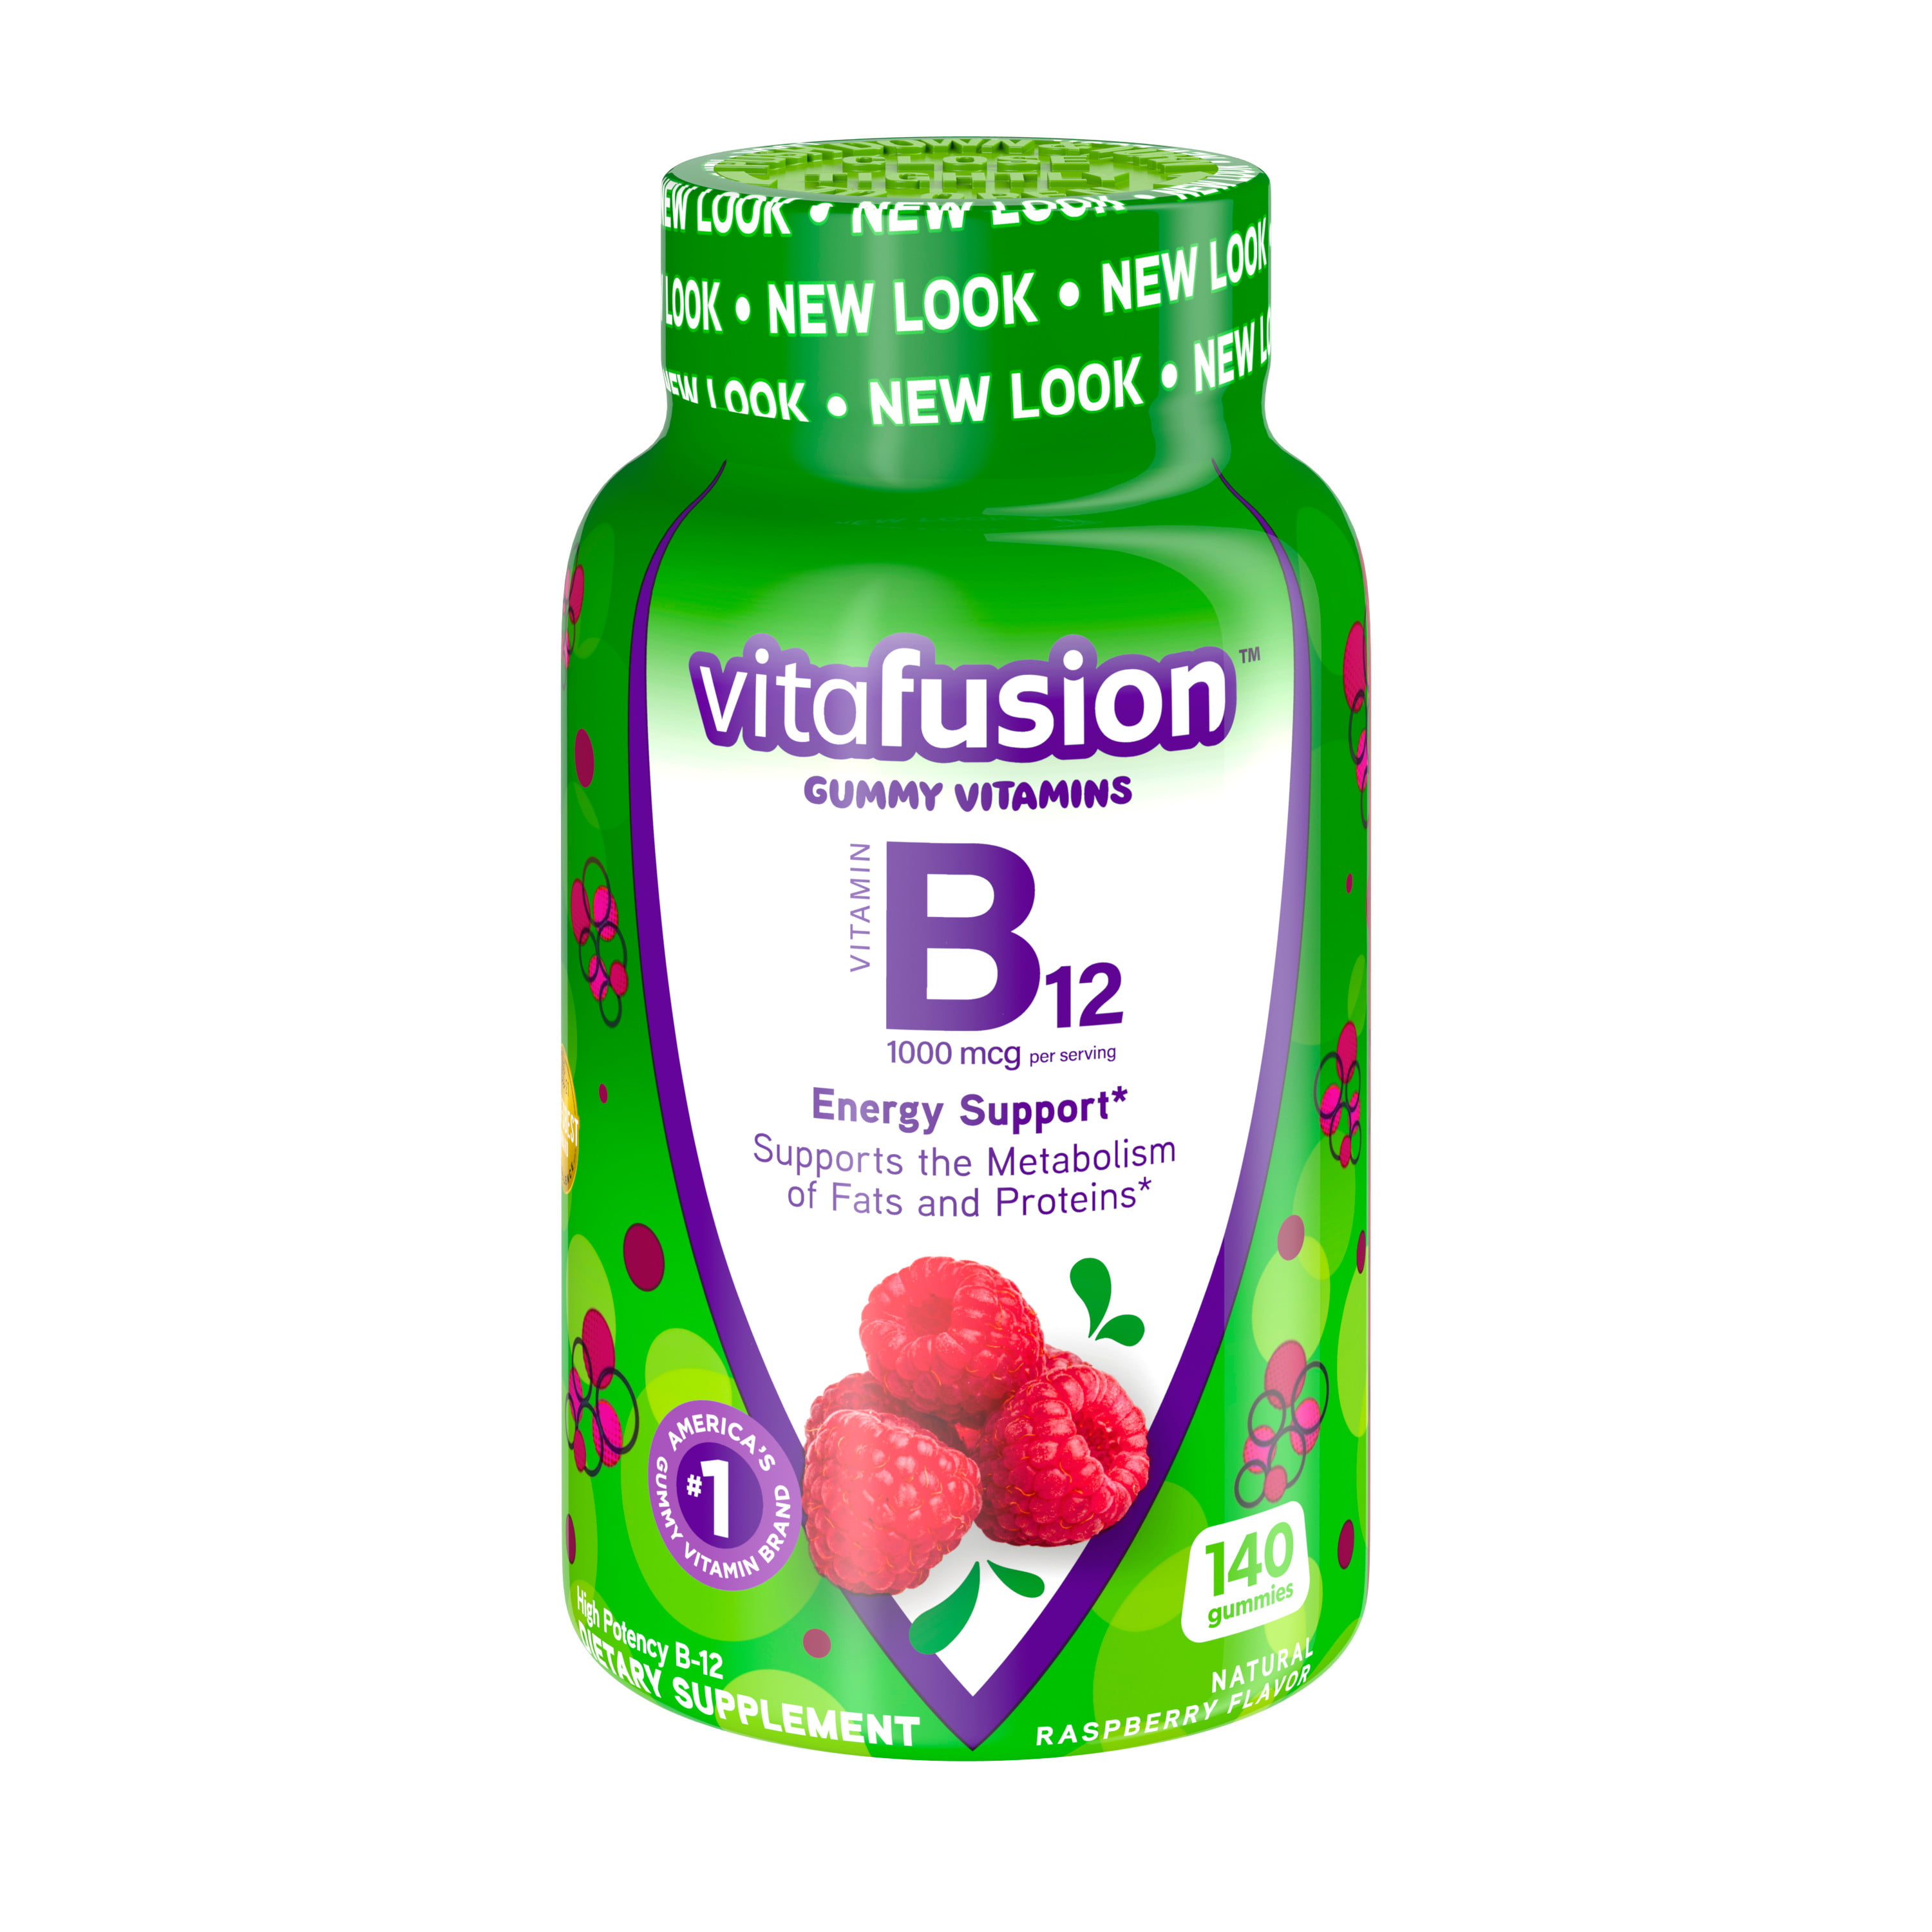 Vitafusion Vitamin B-12 1000 mcg Gummy Supplement, 140ct - Walmart.com ...